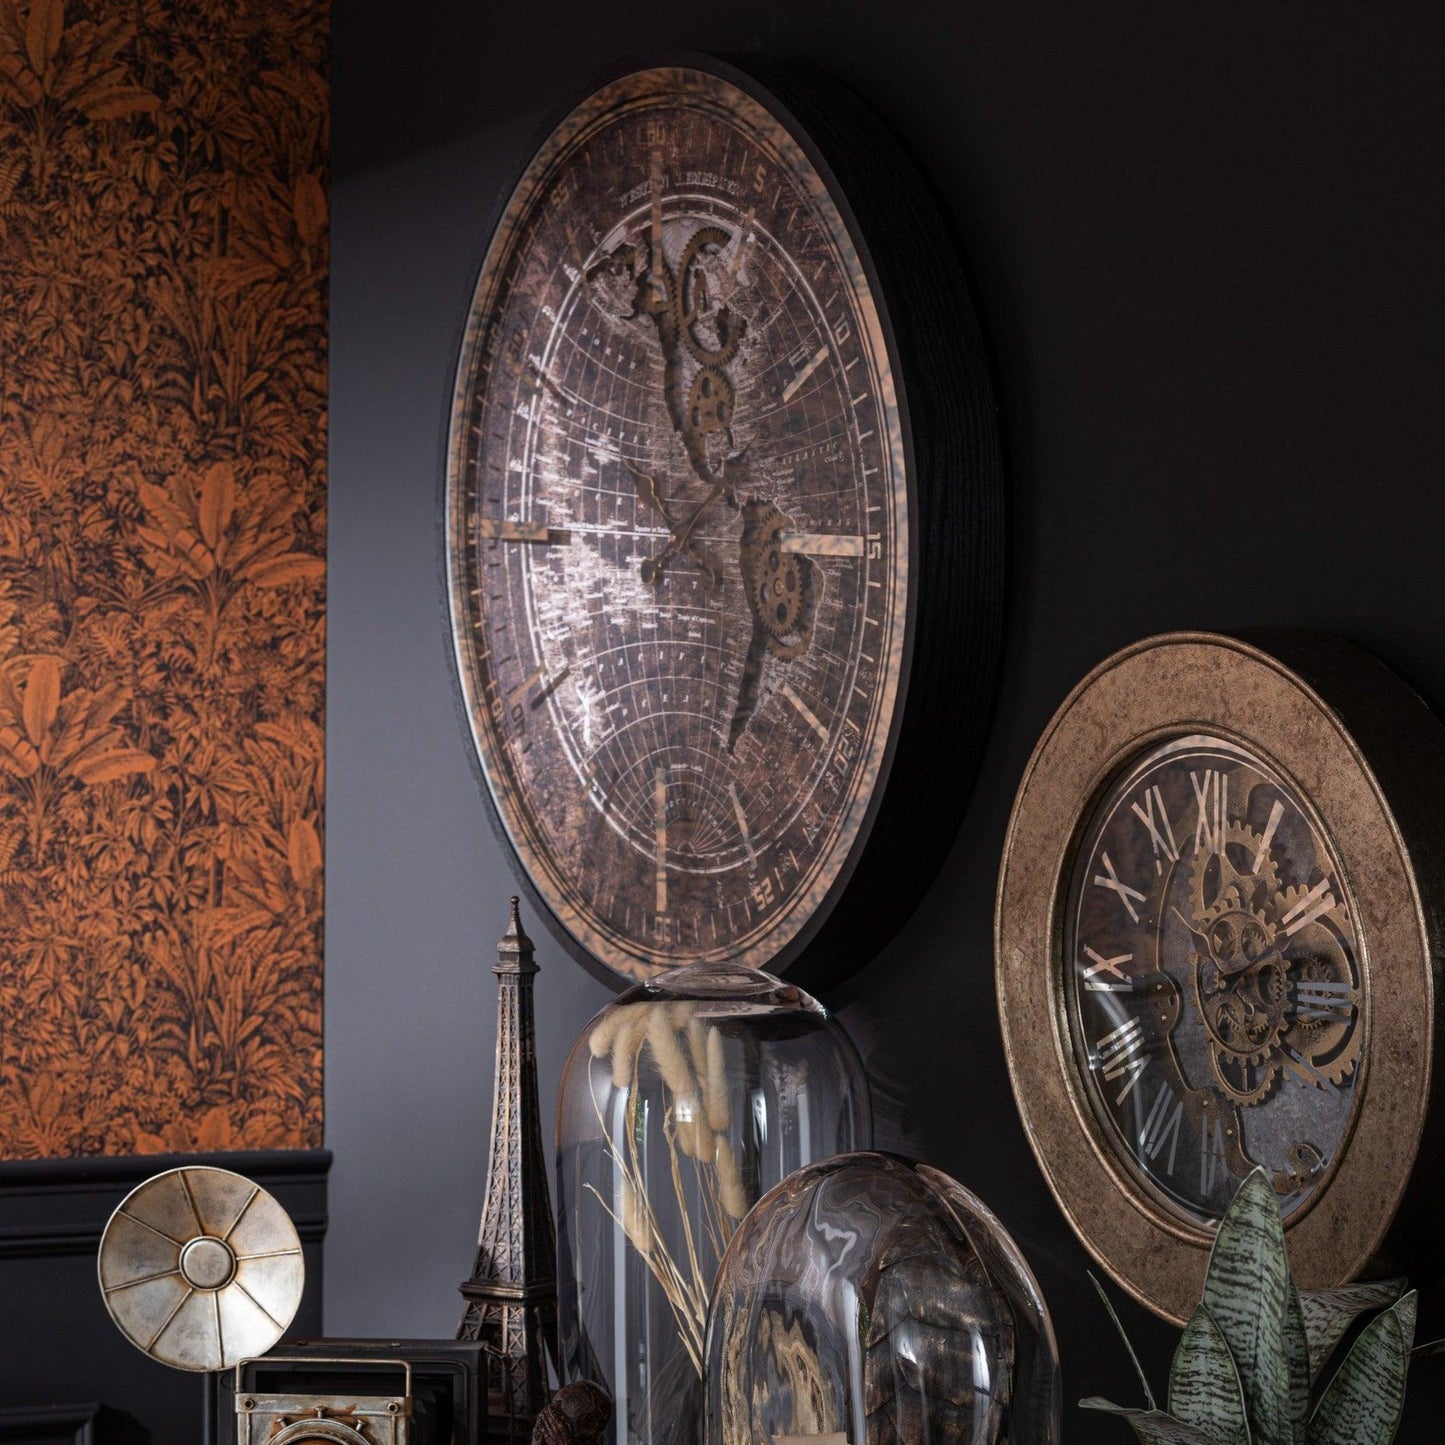 Black Wood Wall Clock